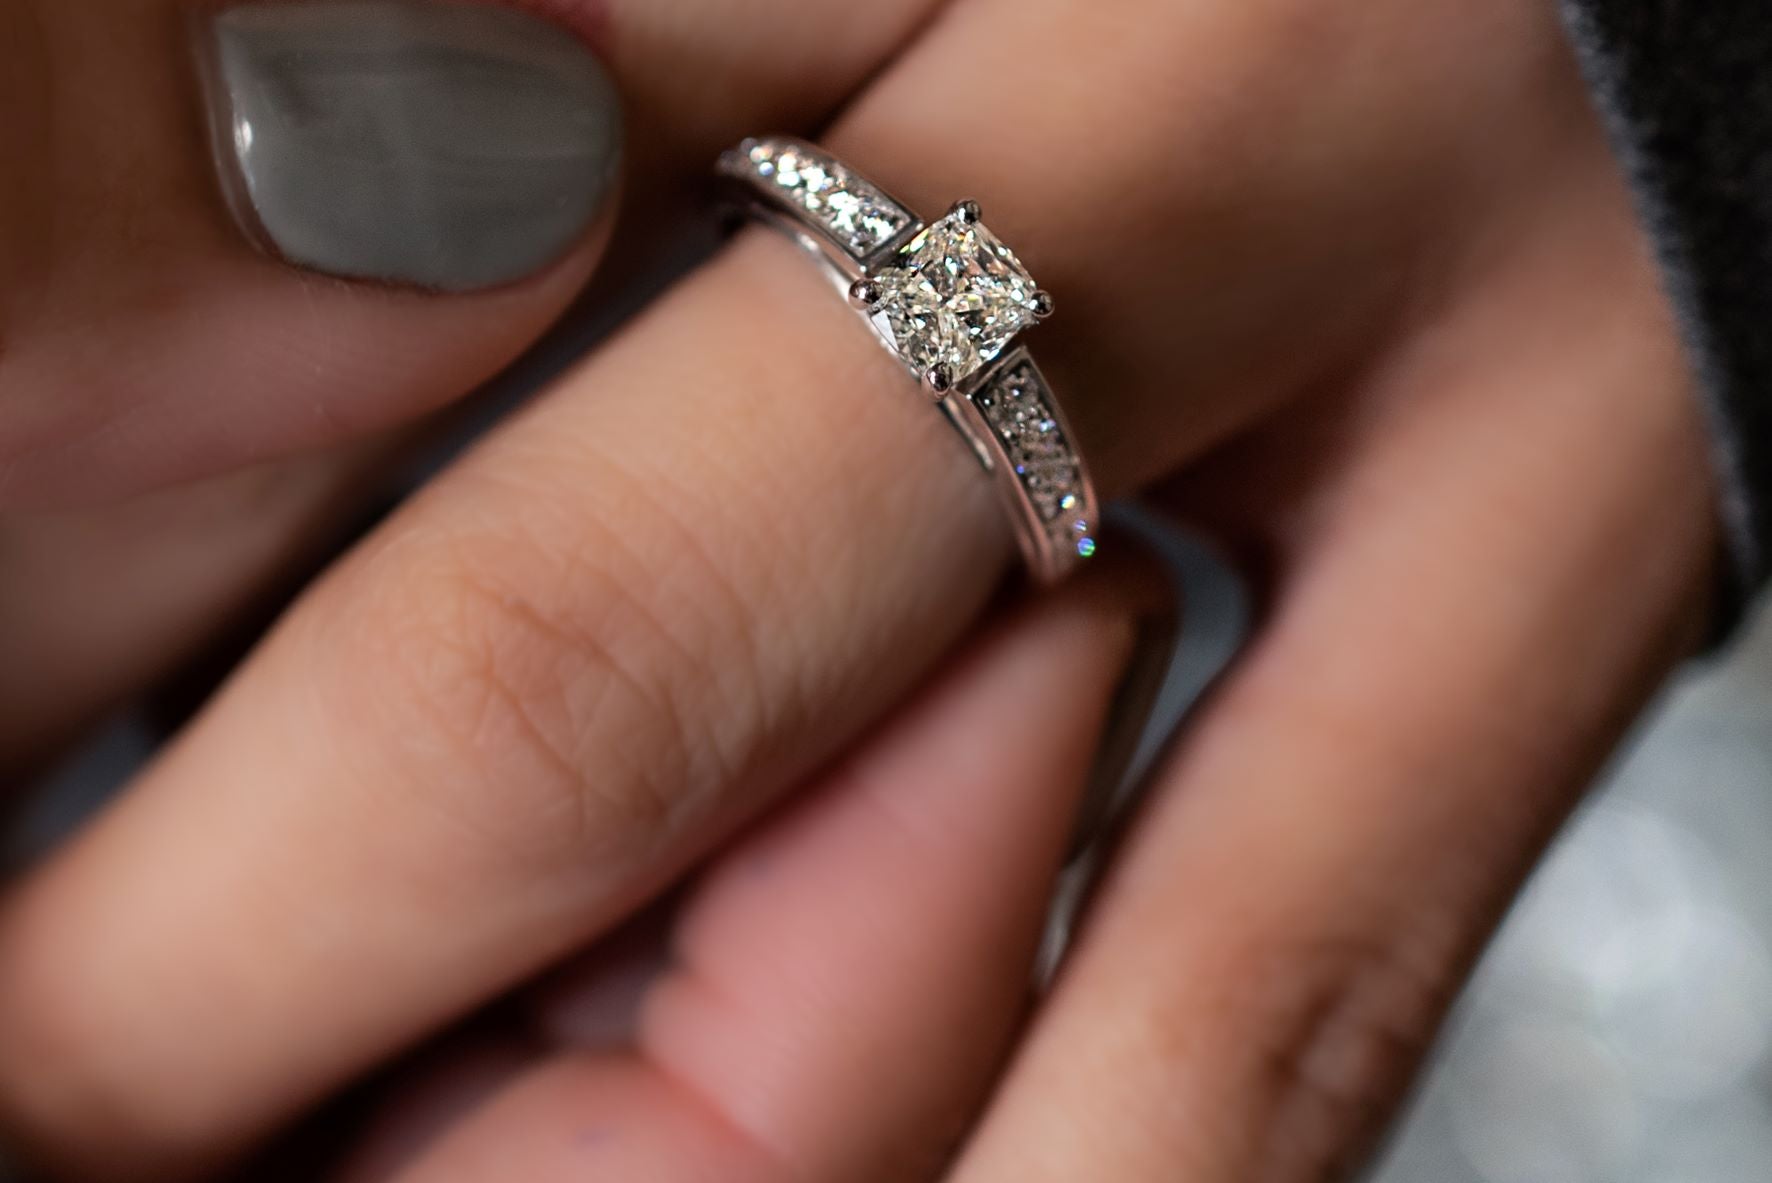 1.33 ctw Cushion Cut Diamond Engagement Ring